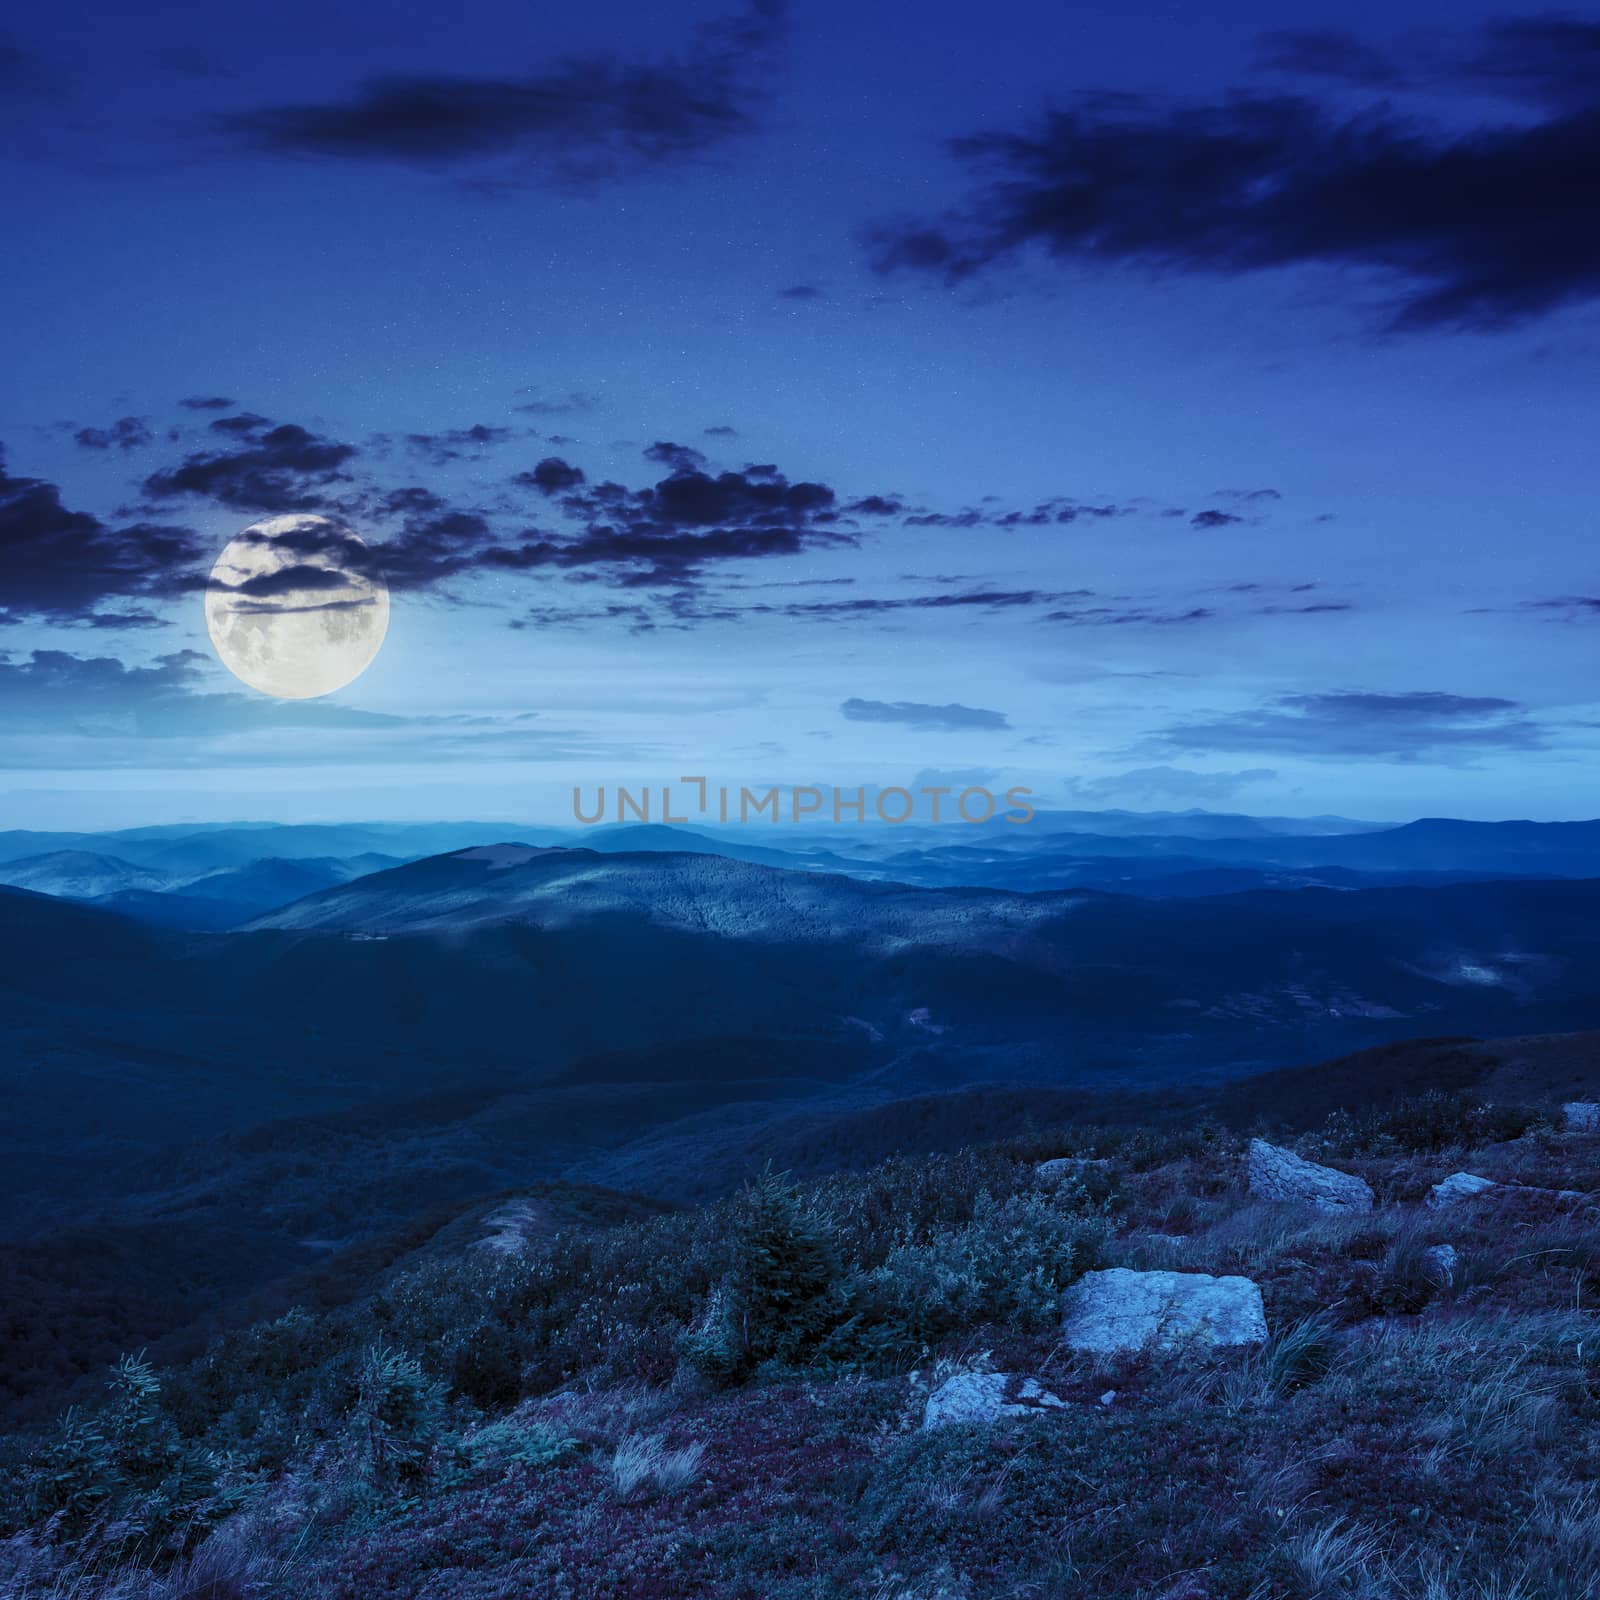 white sharp stones on the hillside at night in moon light